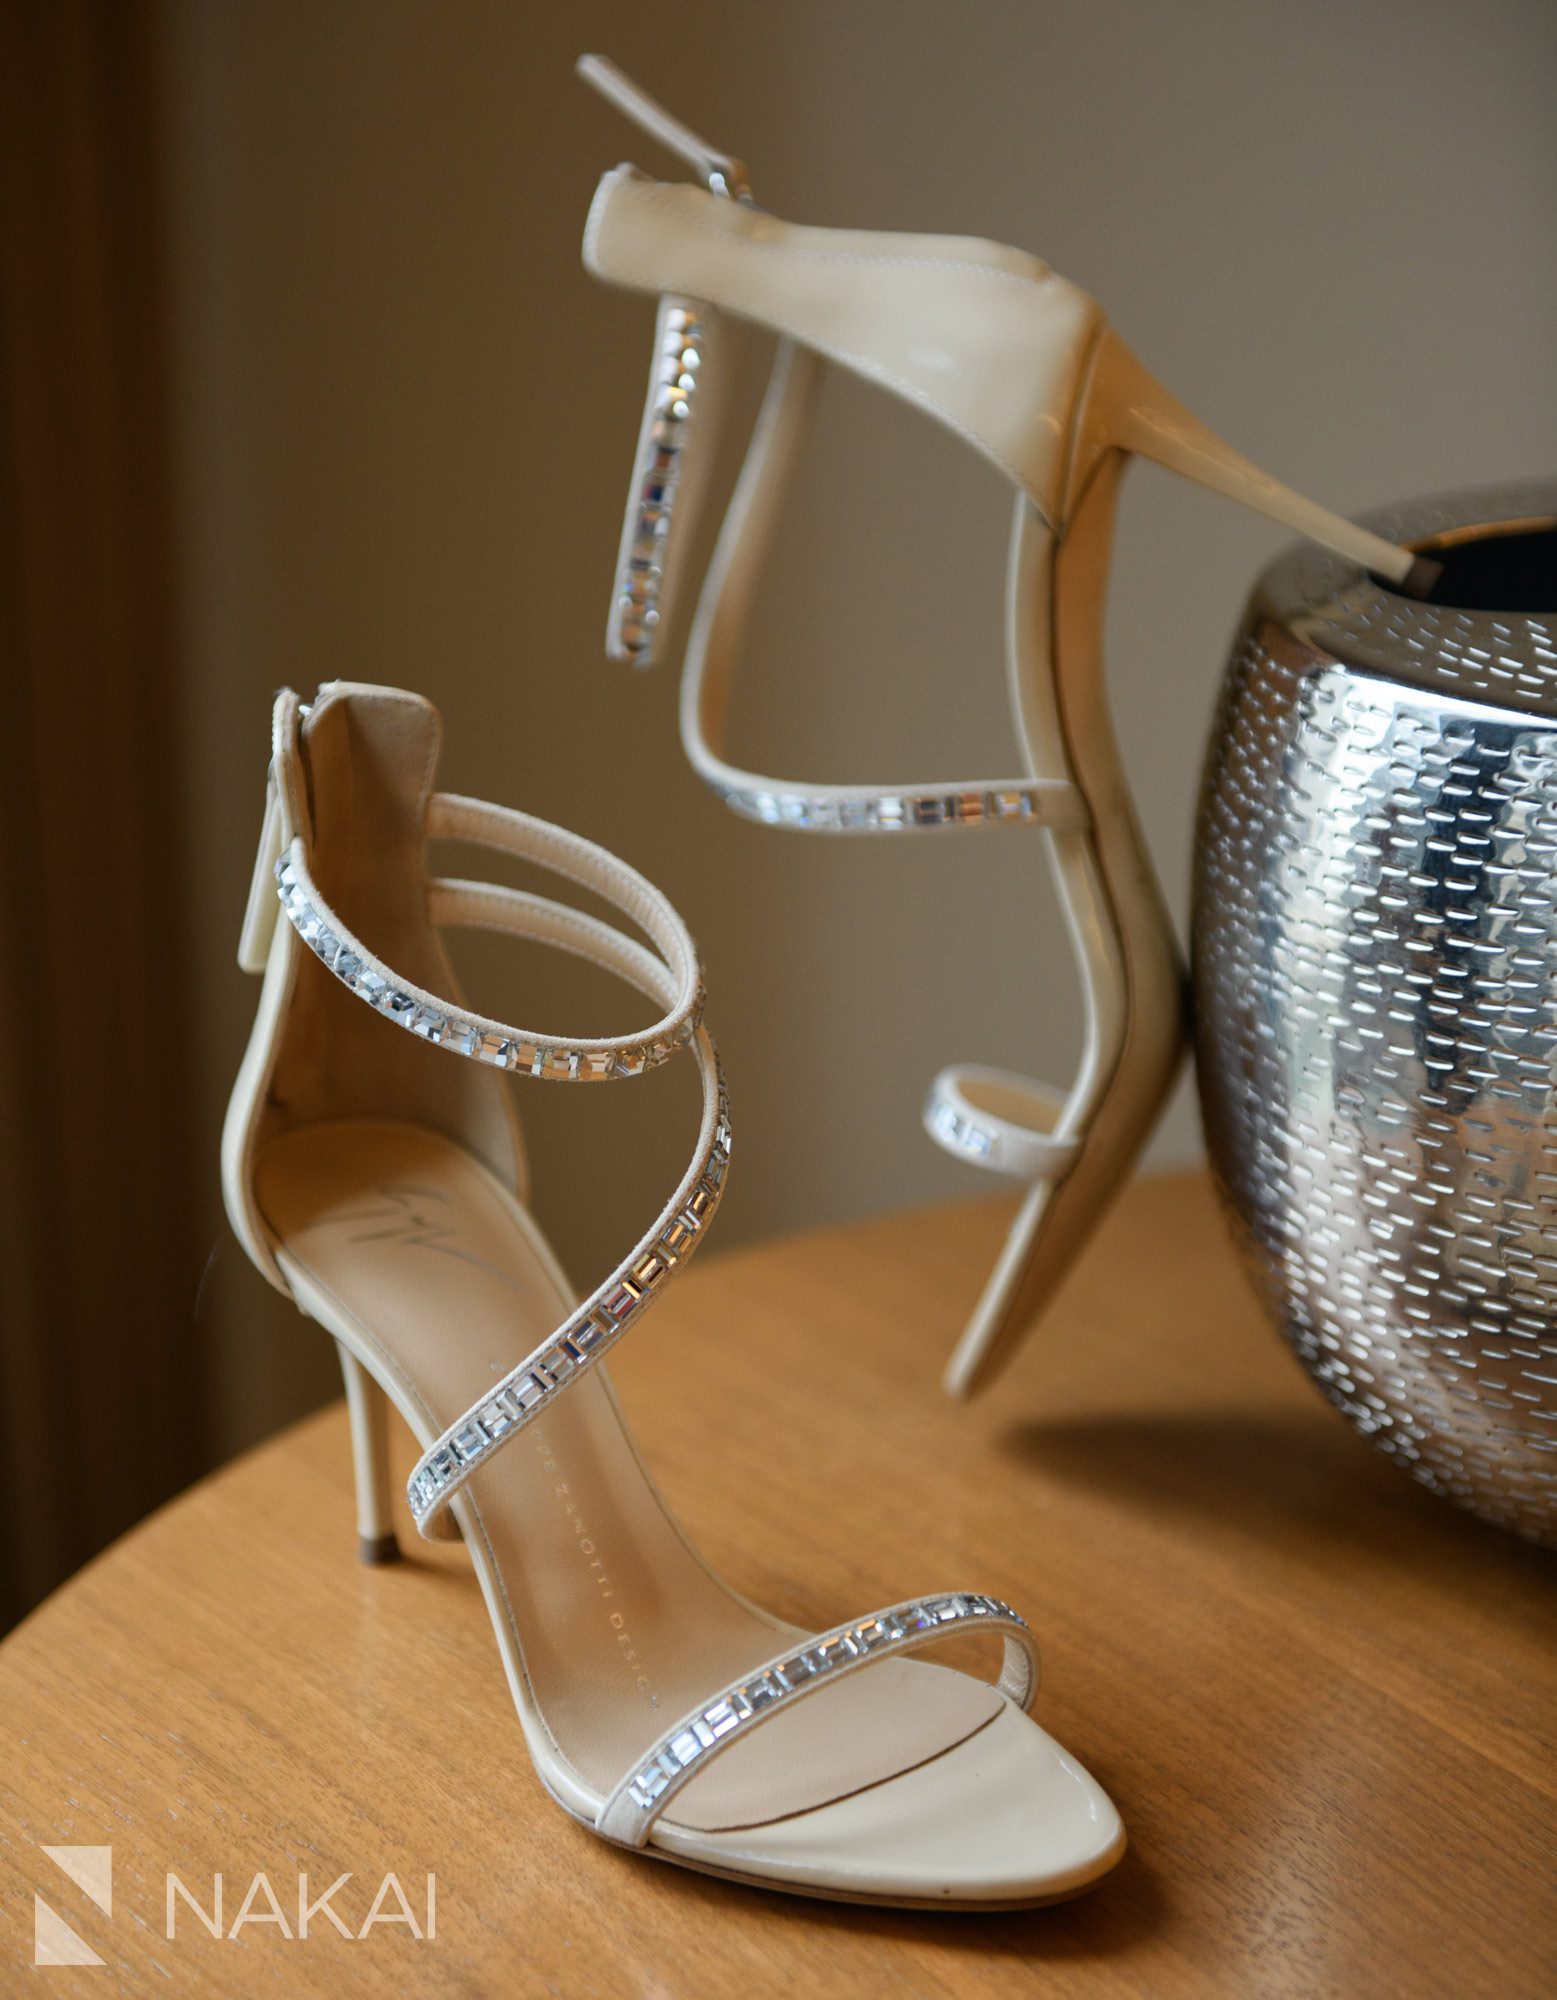 langham chicago wedding photos luxury details shoes